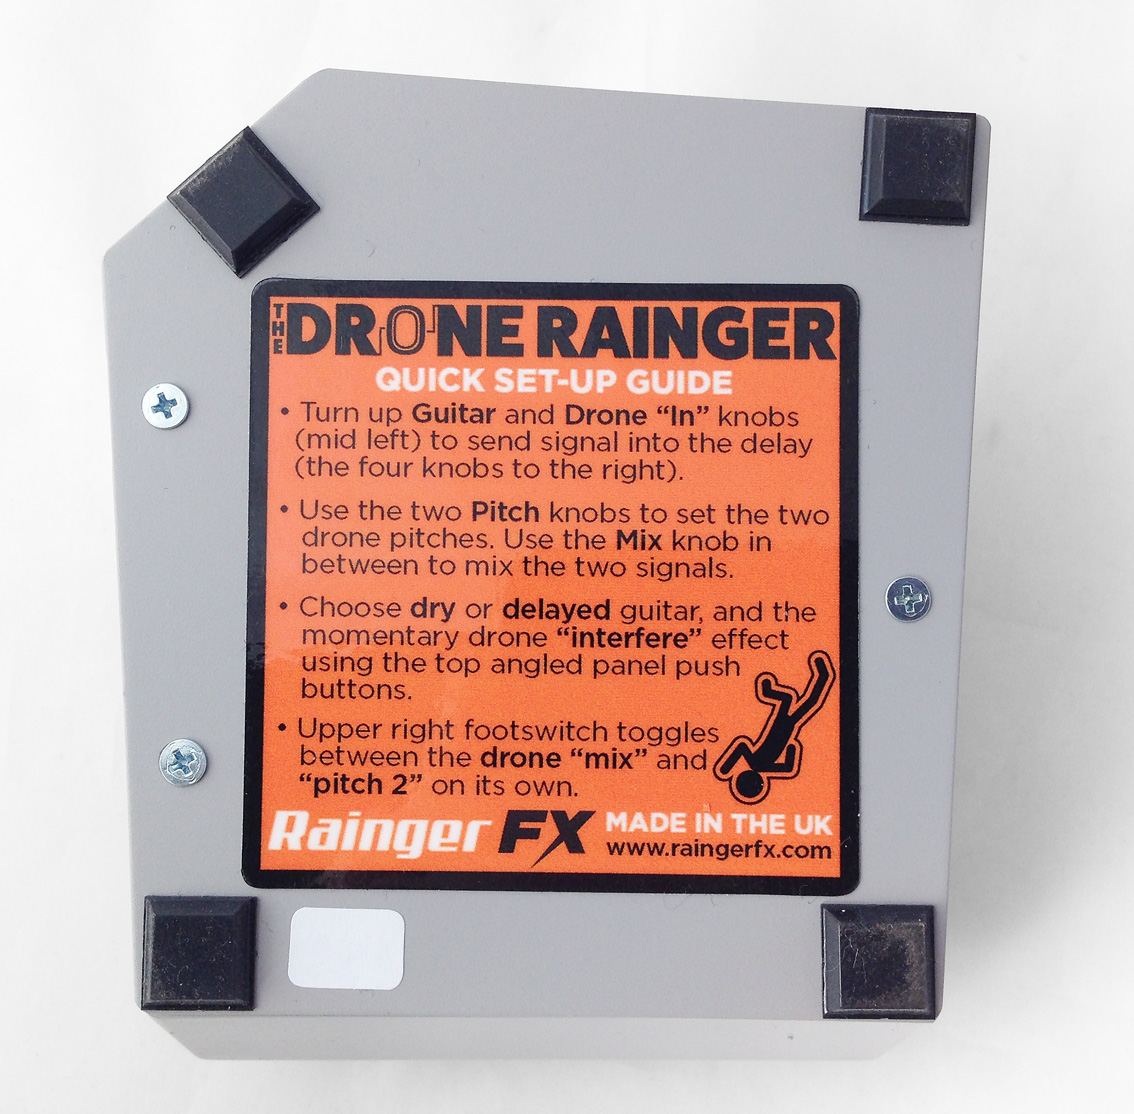 Rainger Fx Drone Rainger Digital Delay - Reverb/delay/echo effect pedaal - Variation 3